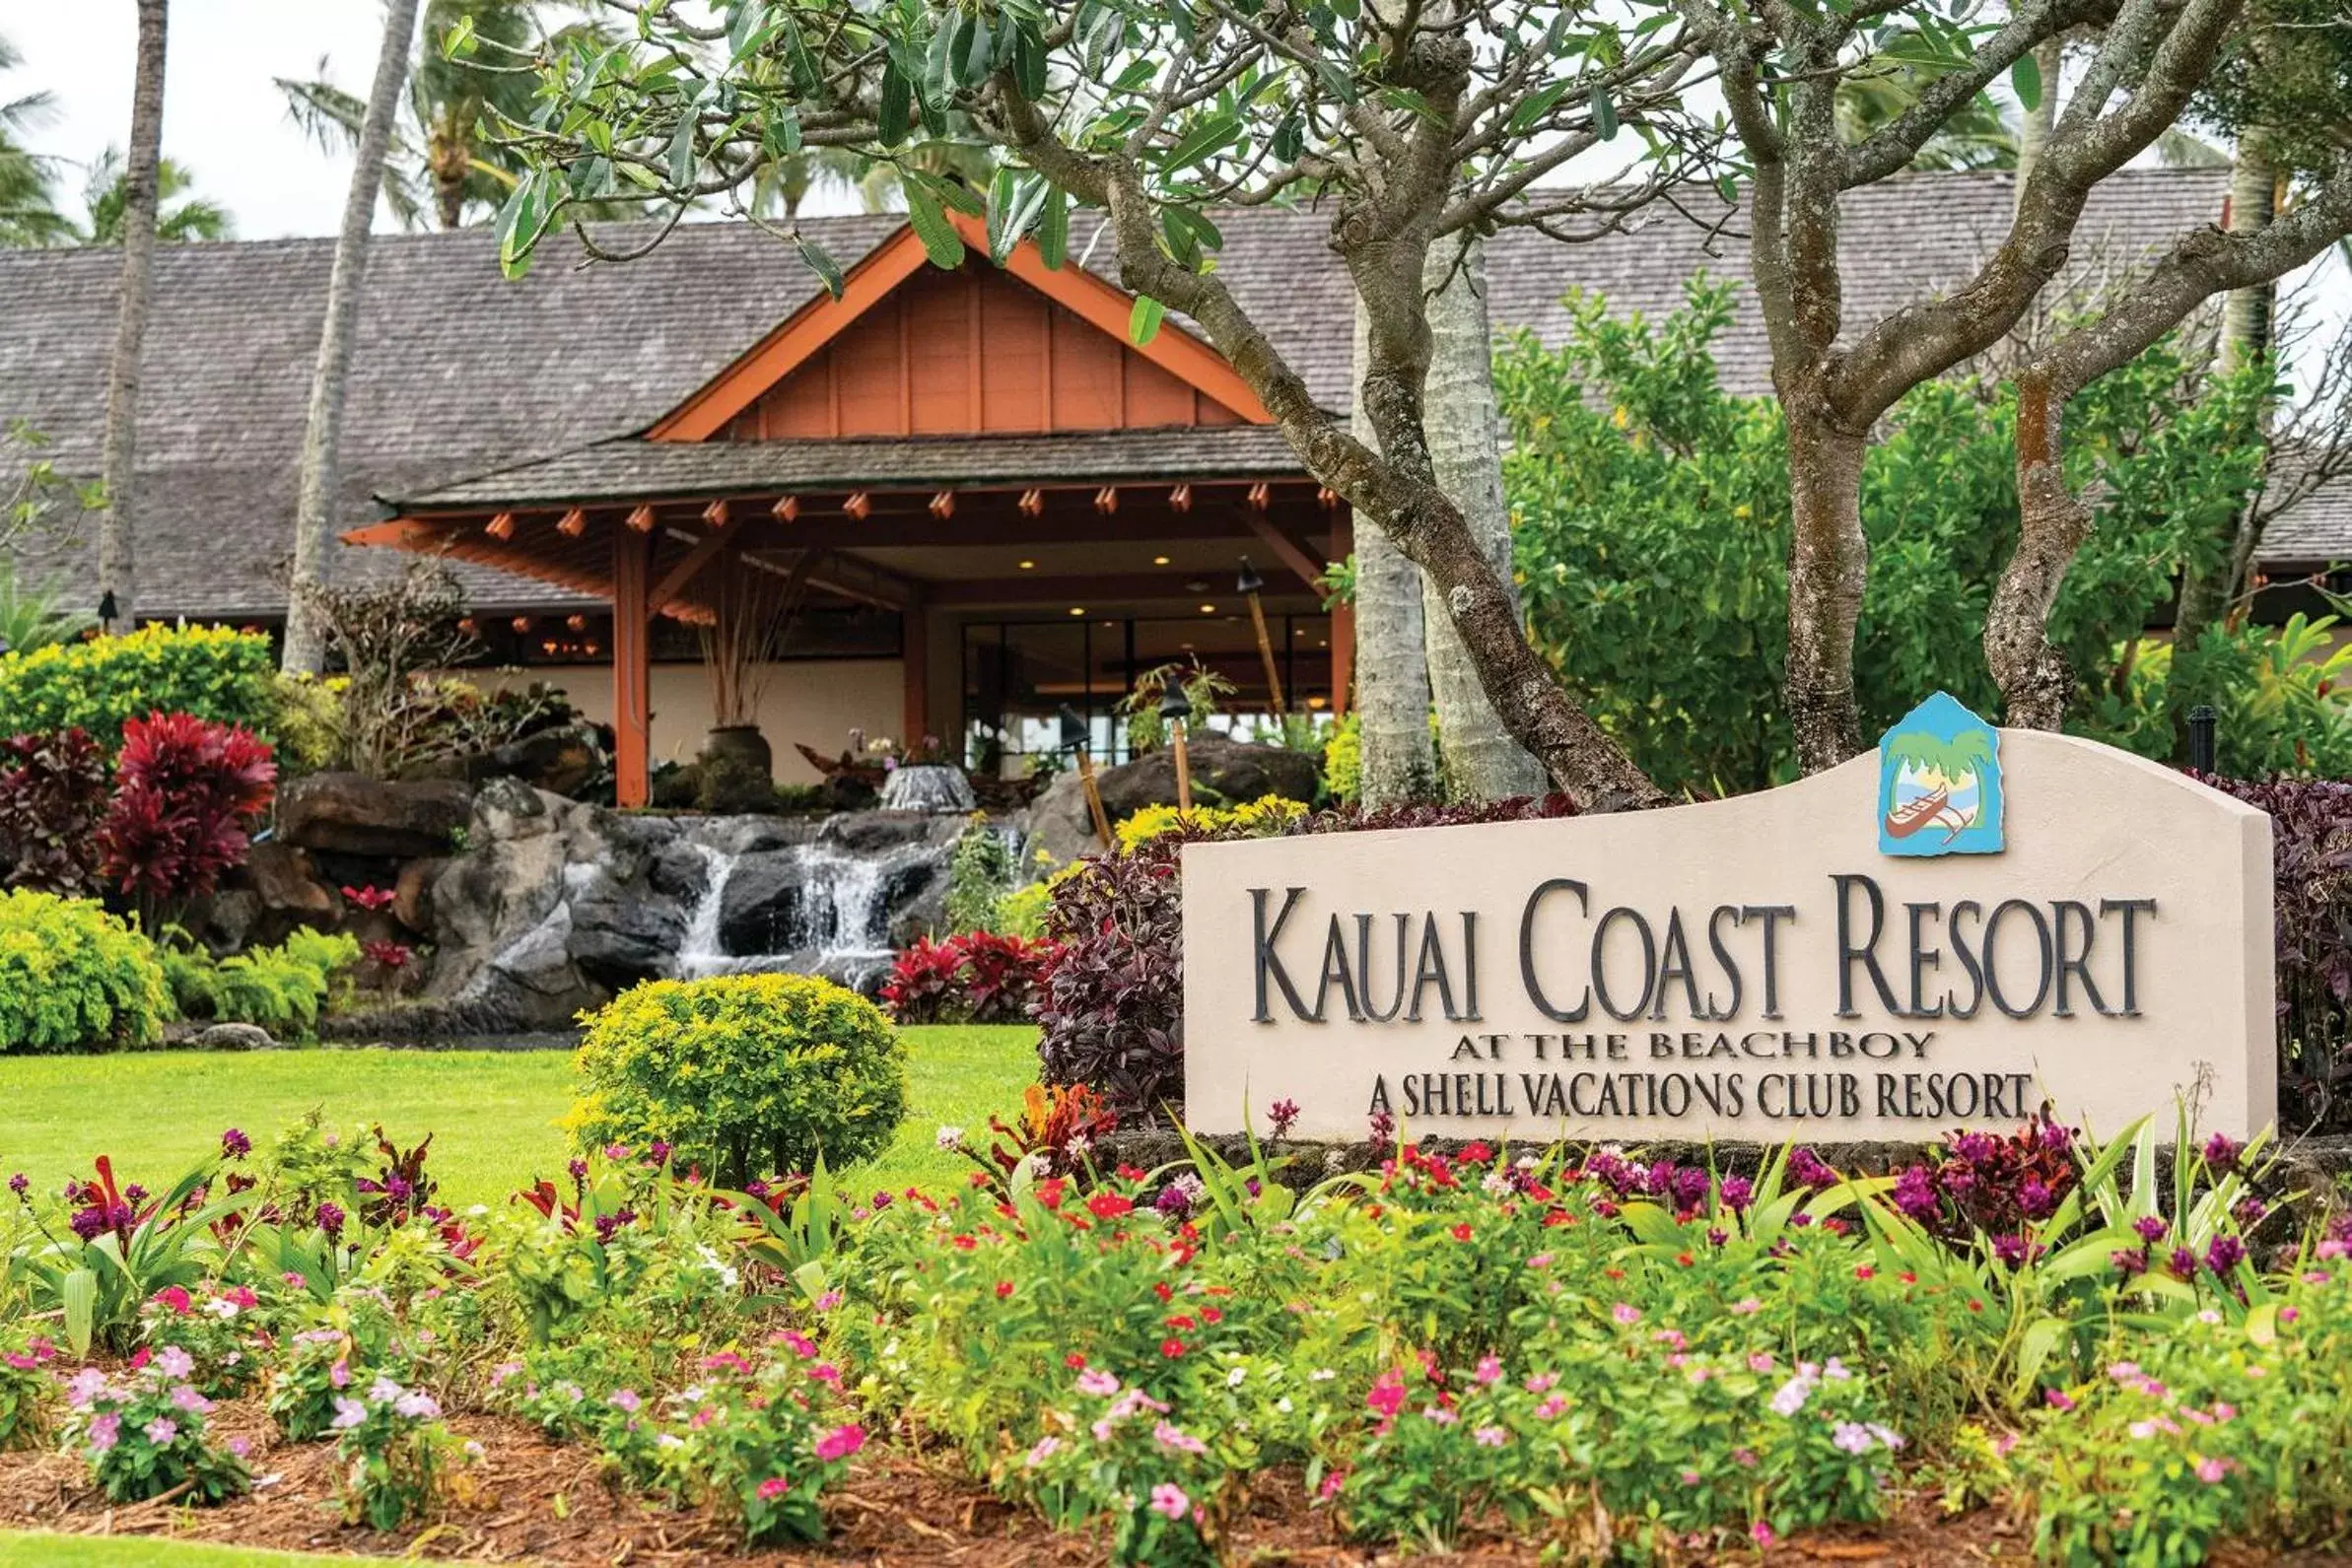 Property Building in Kauai Coast Resort at the Beach Boy